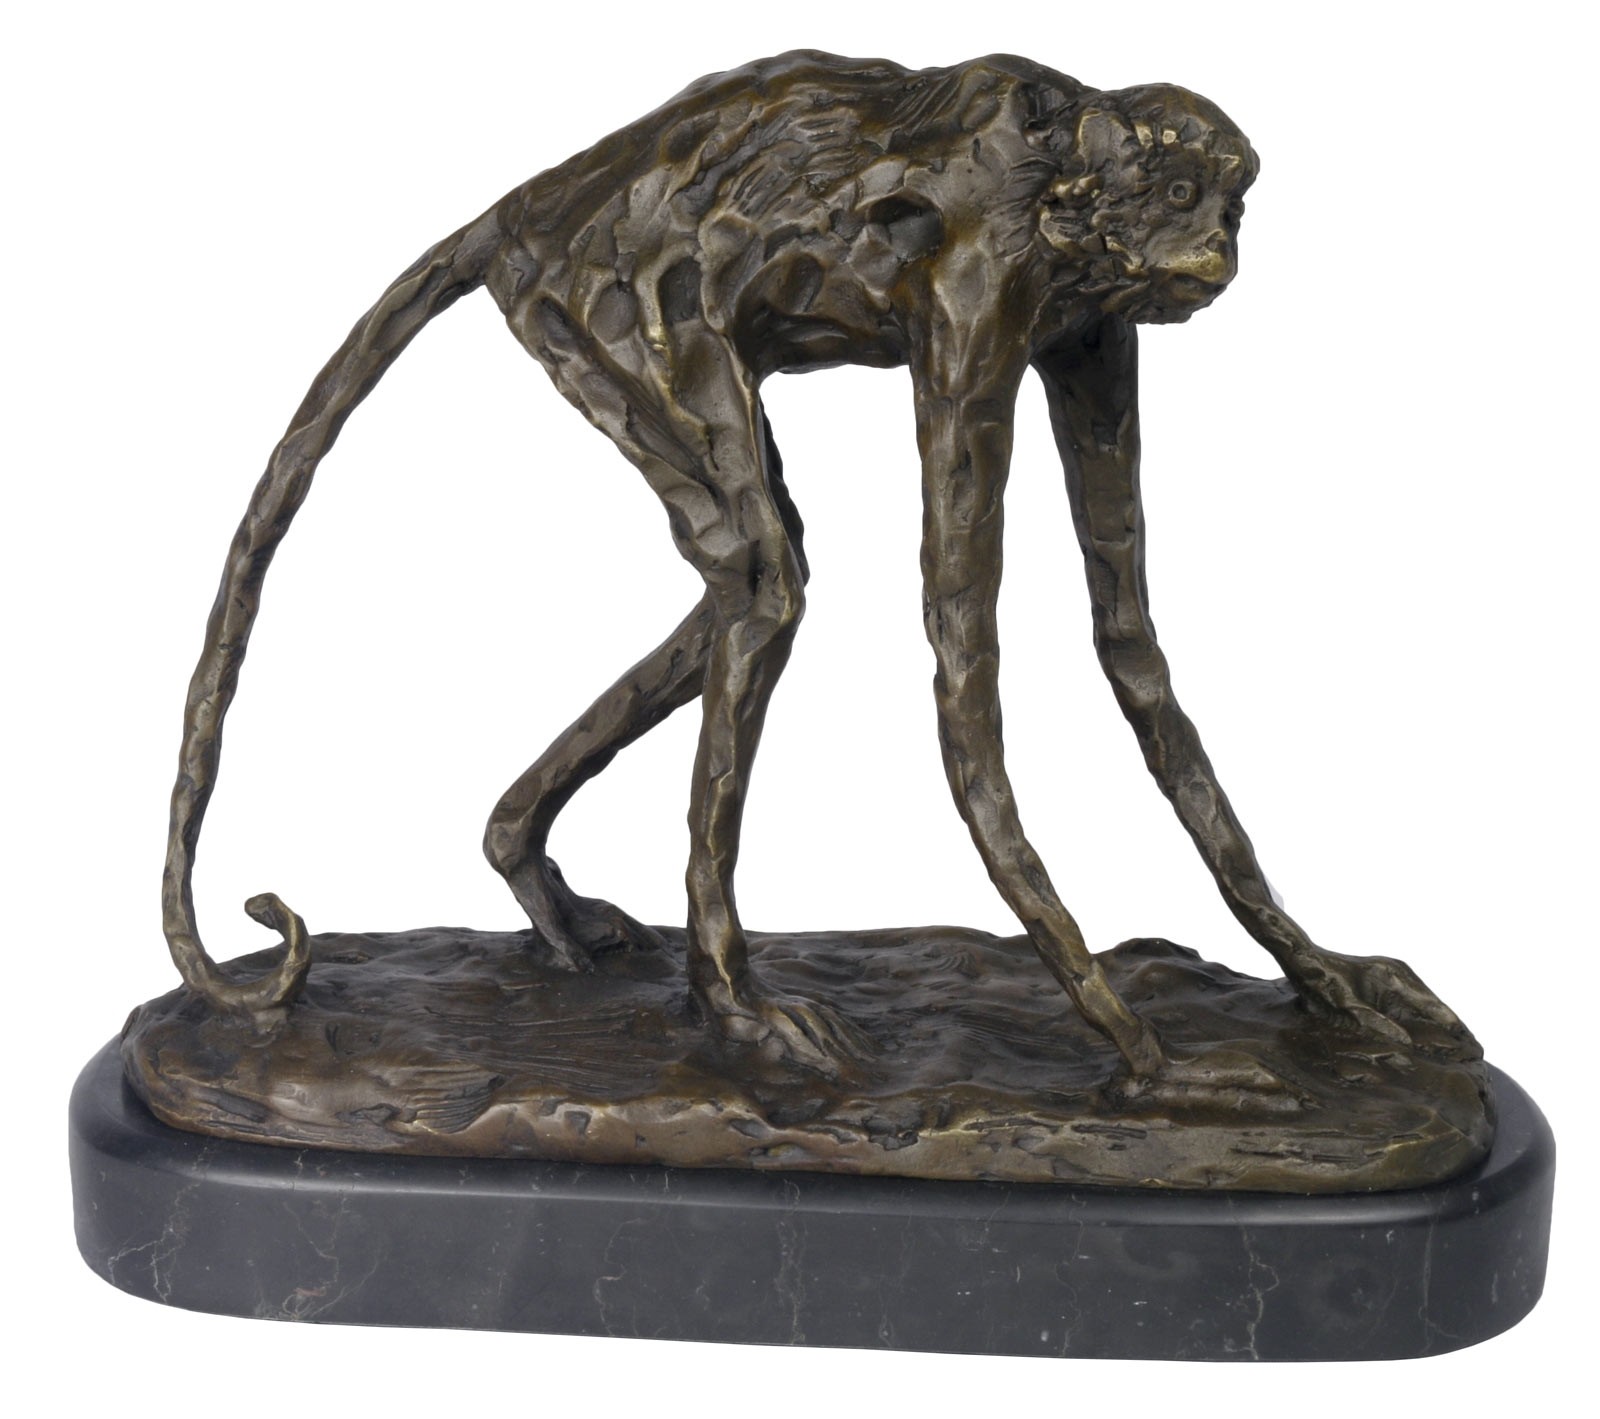 Foundry Cast Bronze Monkey Sculpture On Marble Base 30cm